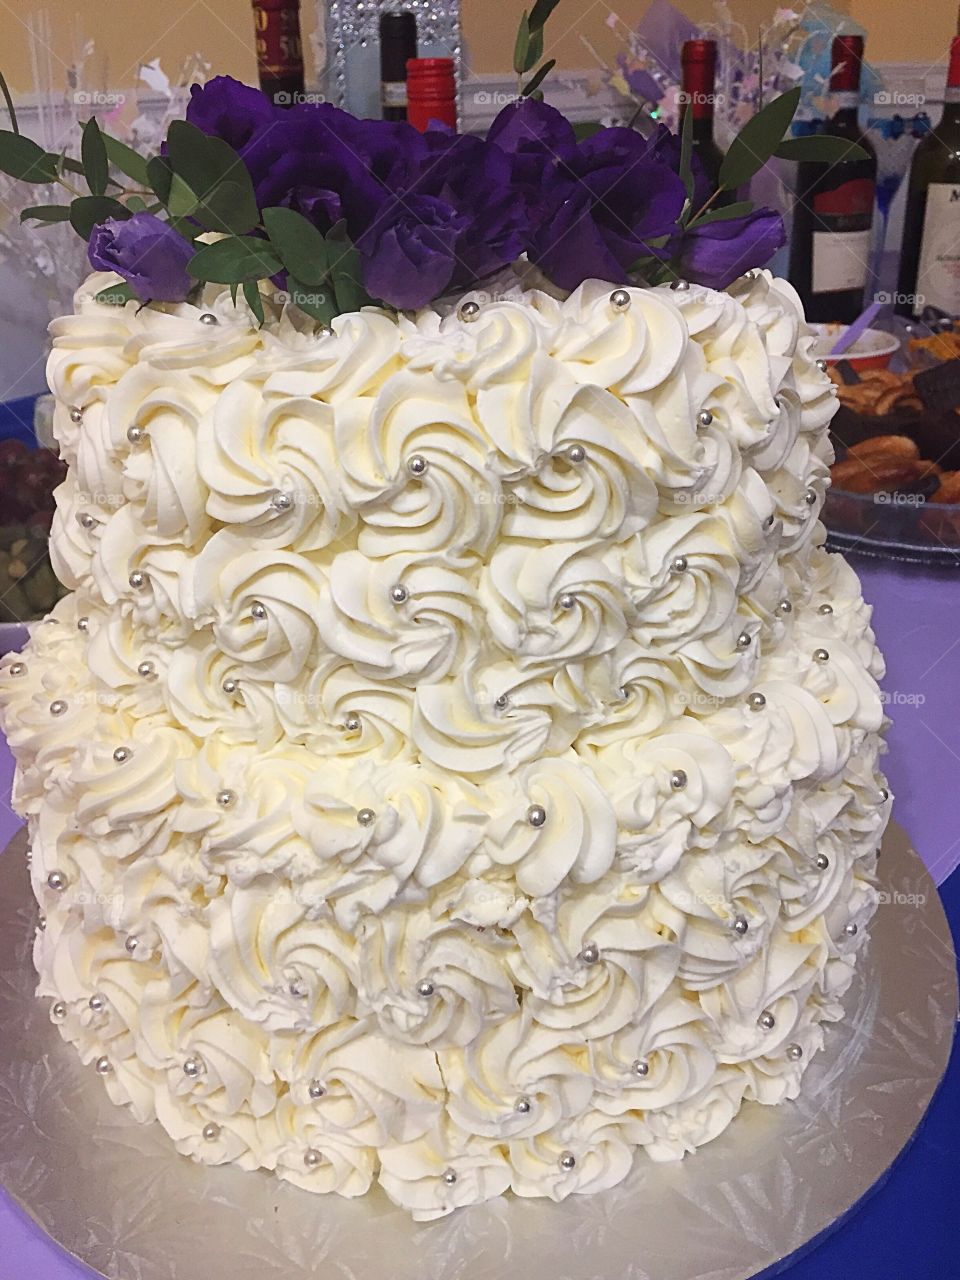 Butter cream vanilla Anniversary cake decorated fresh purple flowers on top